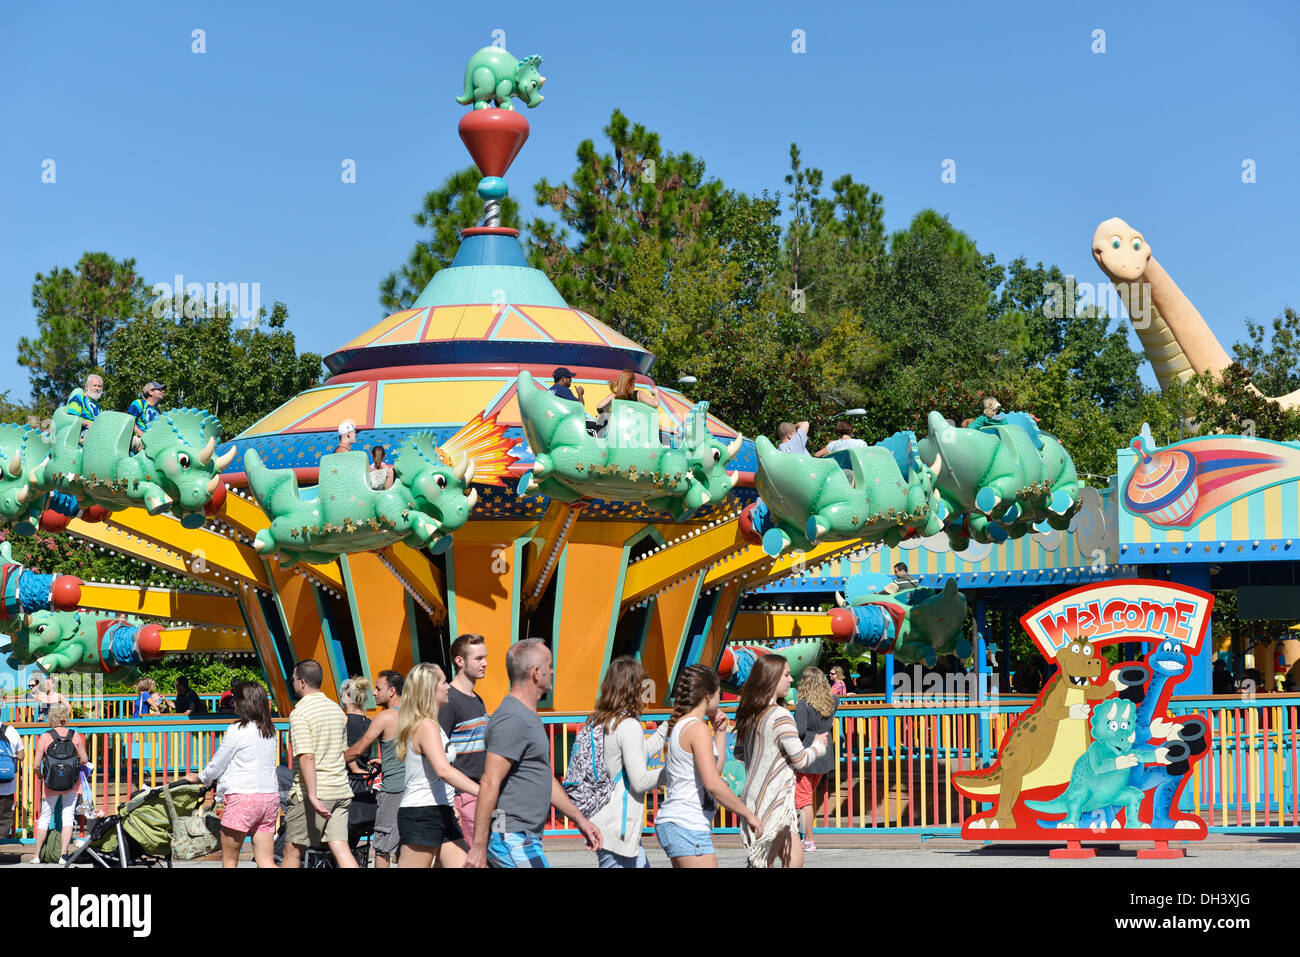 Rides at Dinoland, Animal Kingdom, Disney World Resort, Orlando Florida  Stock Photo - Alamy